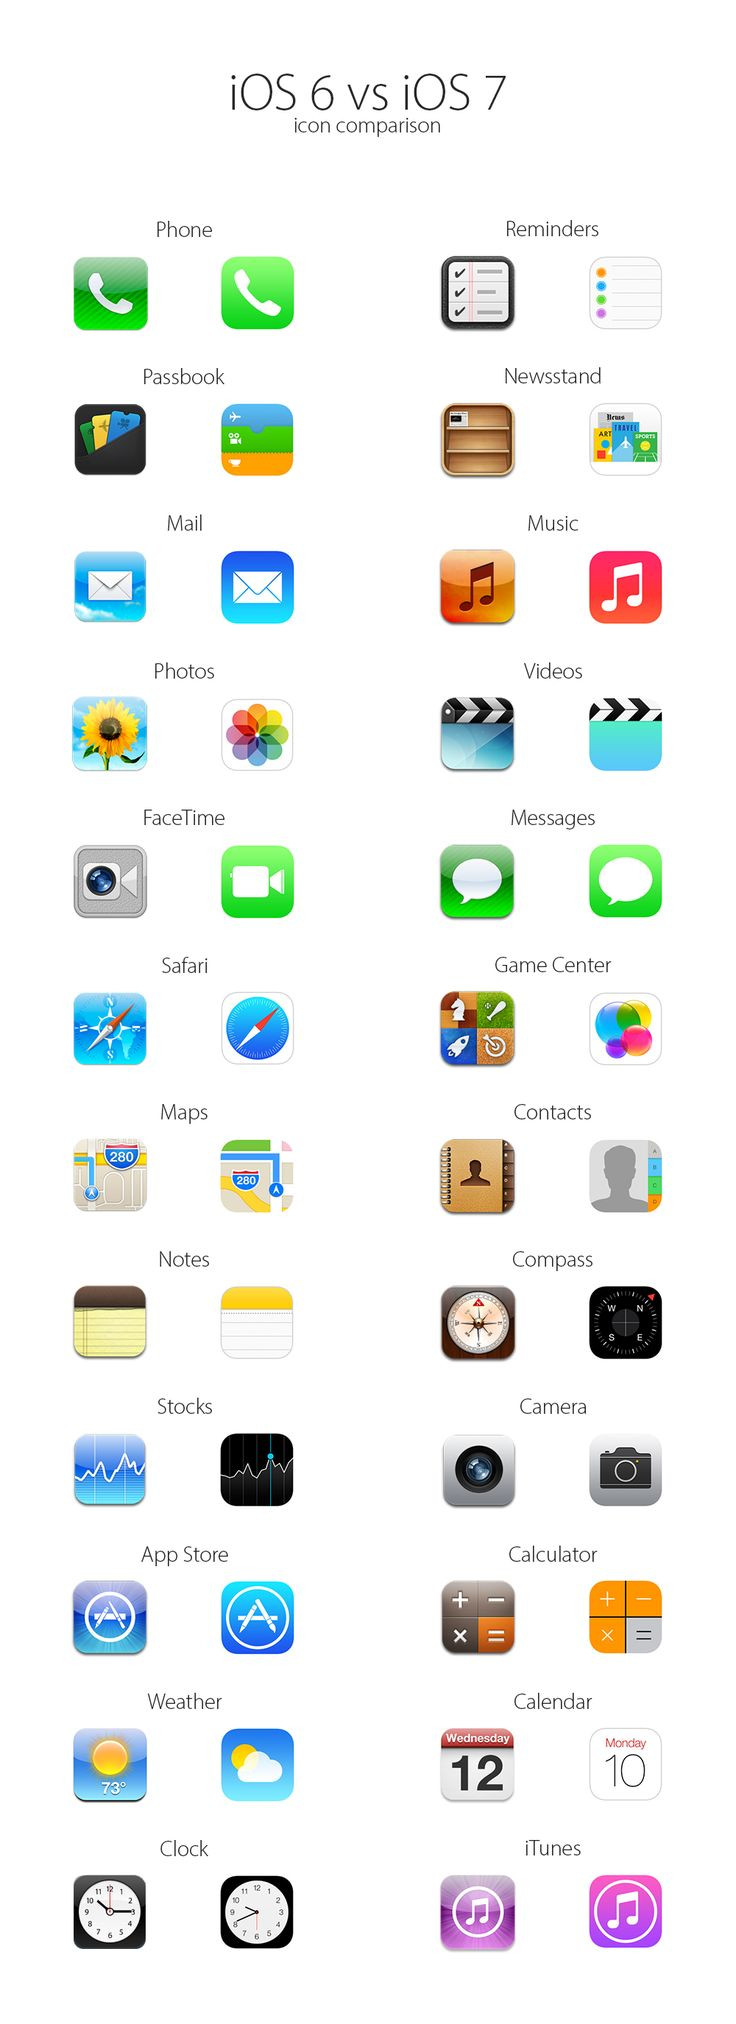 iOS 6 vs. iOS 7: An Icon Comparison [Infographic]